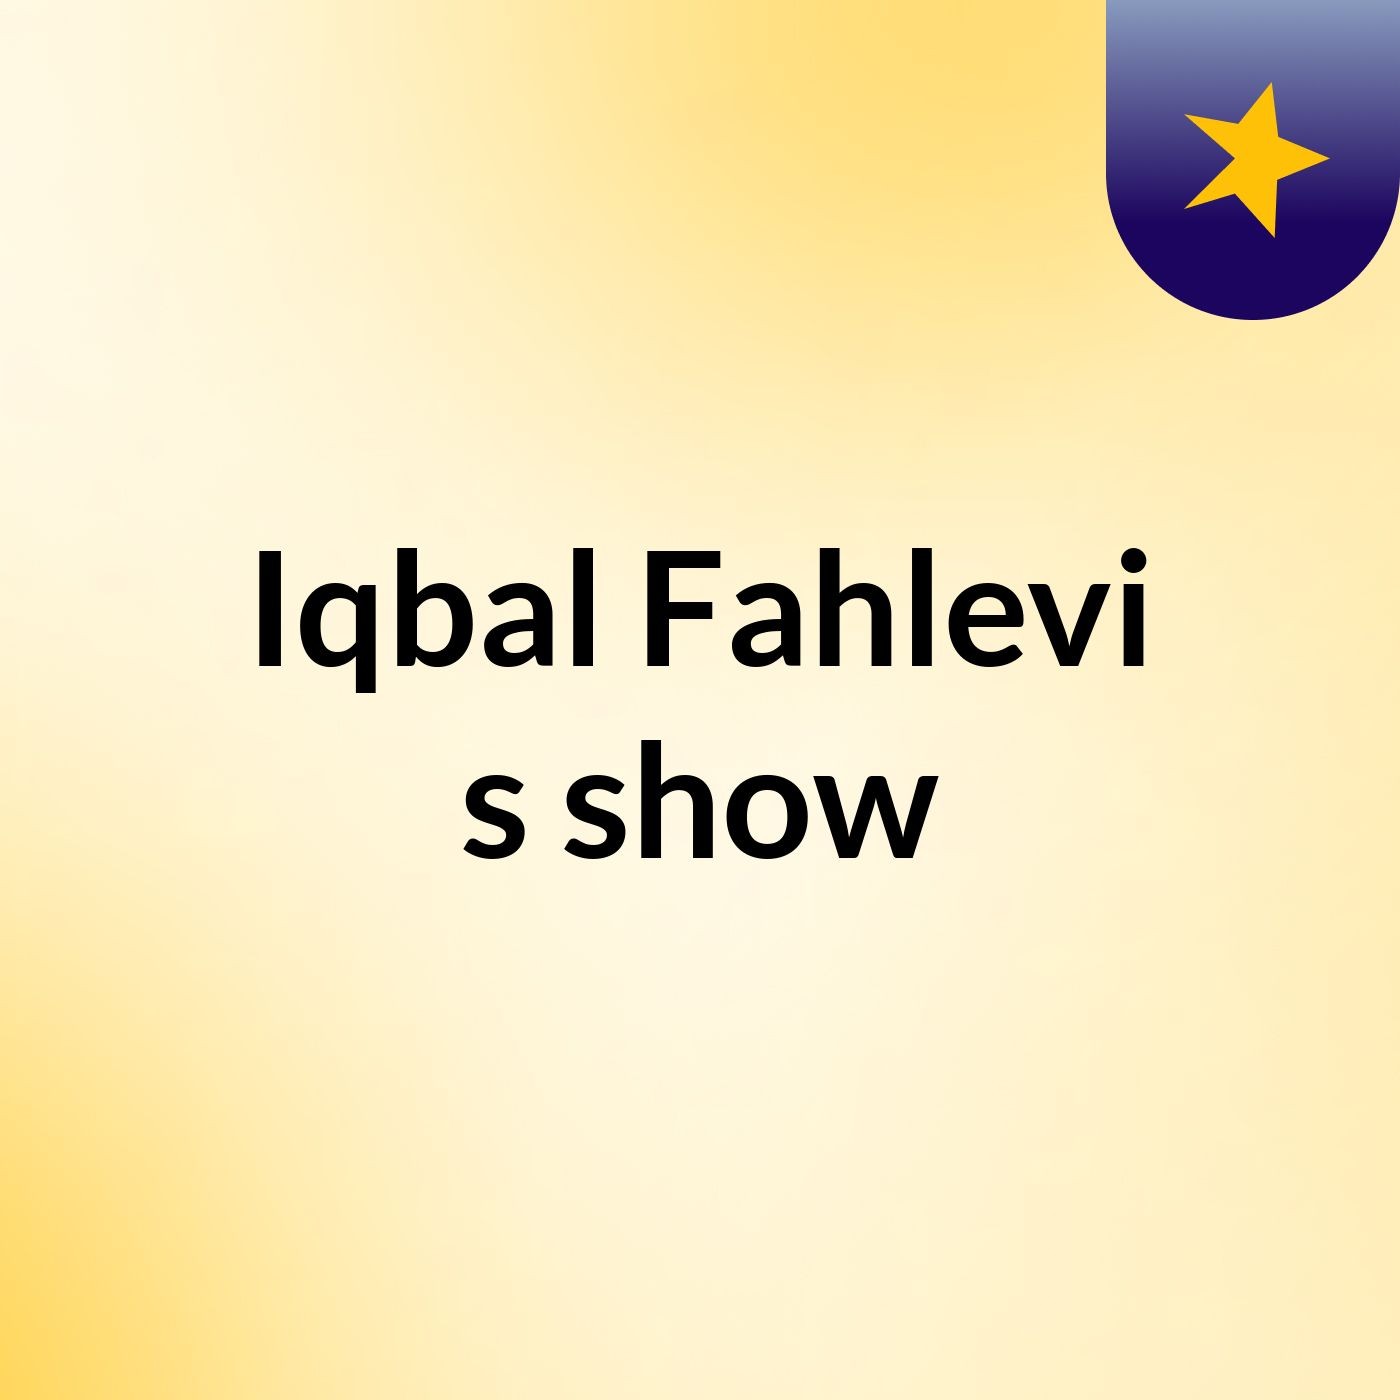 Iqbal Fahlevi's show